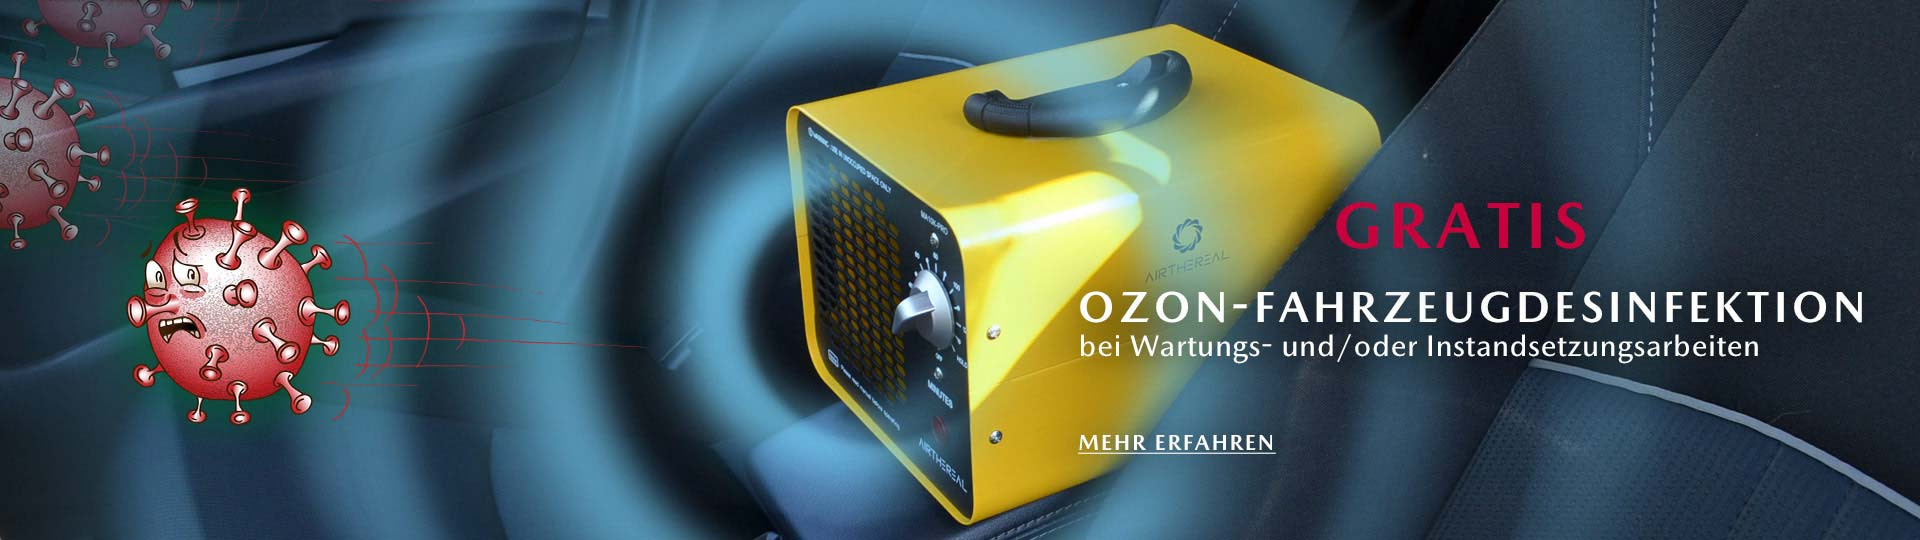 Fahrzeug desinfizieren mit Ozon Behandlung bei Corona Viren